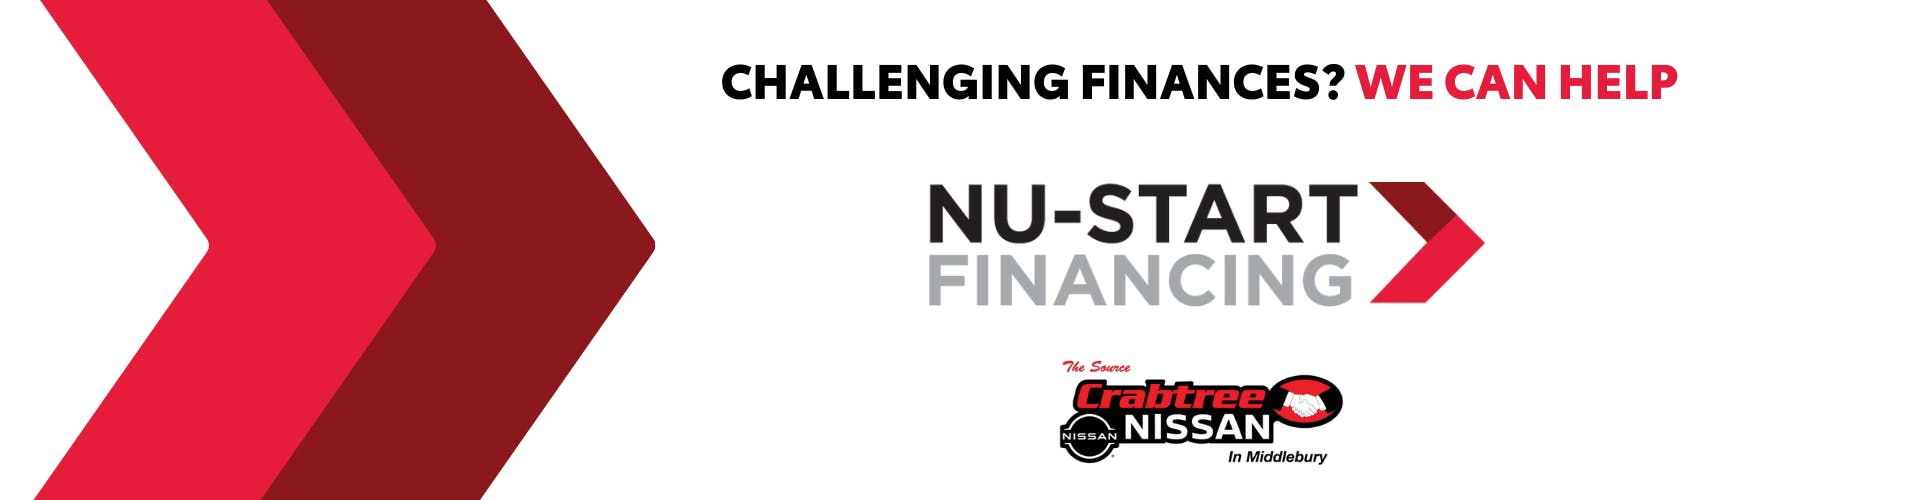 NU-Start Financing